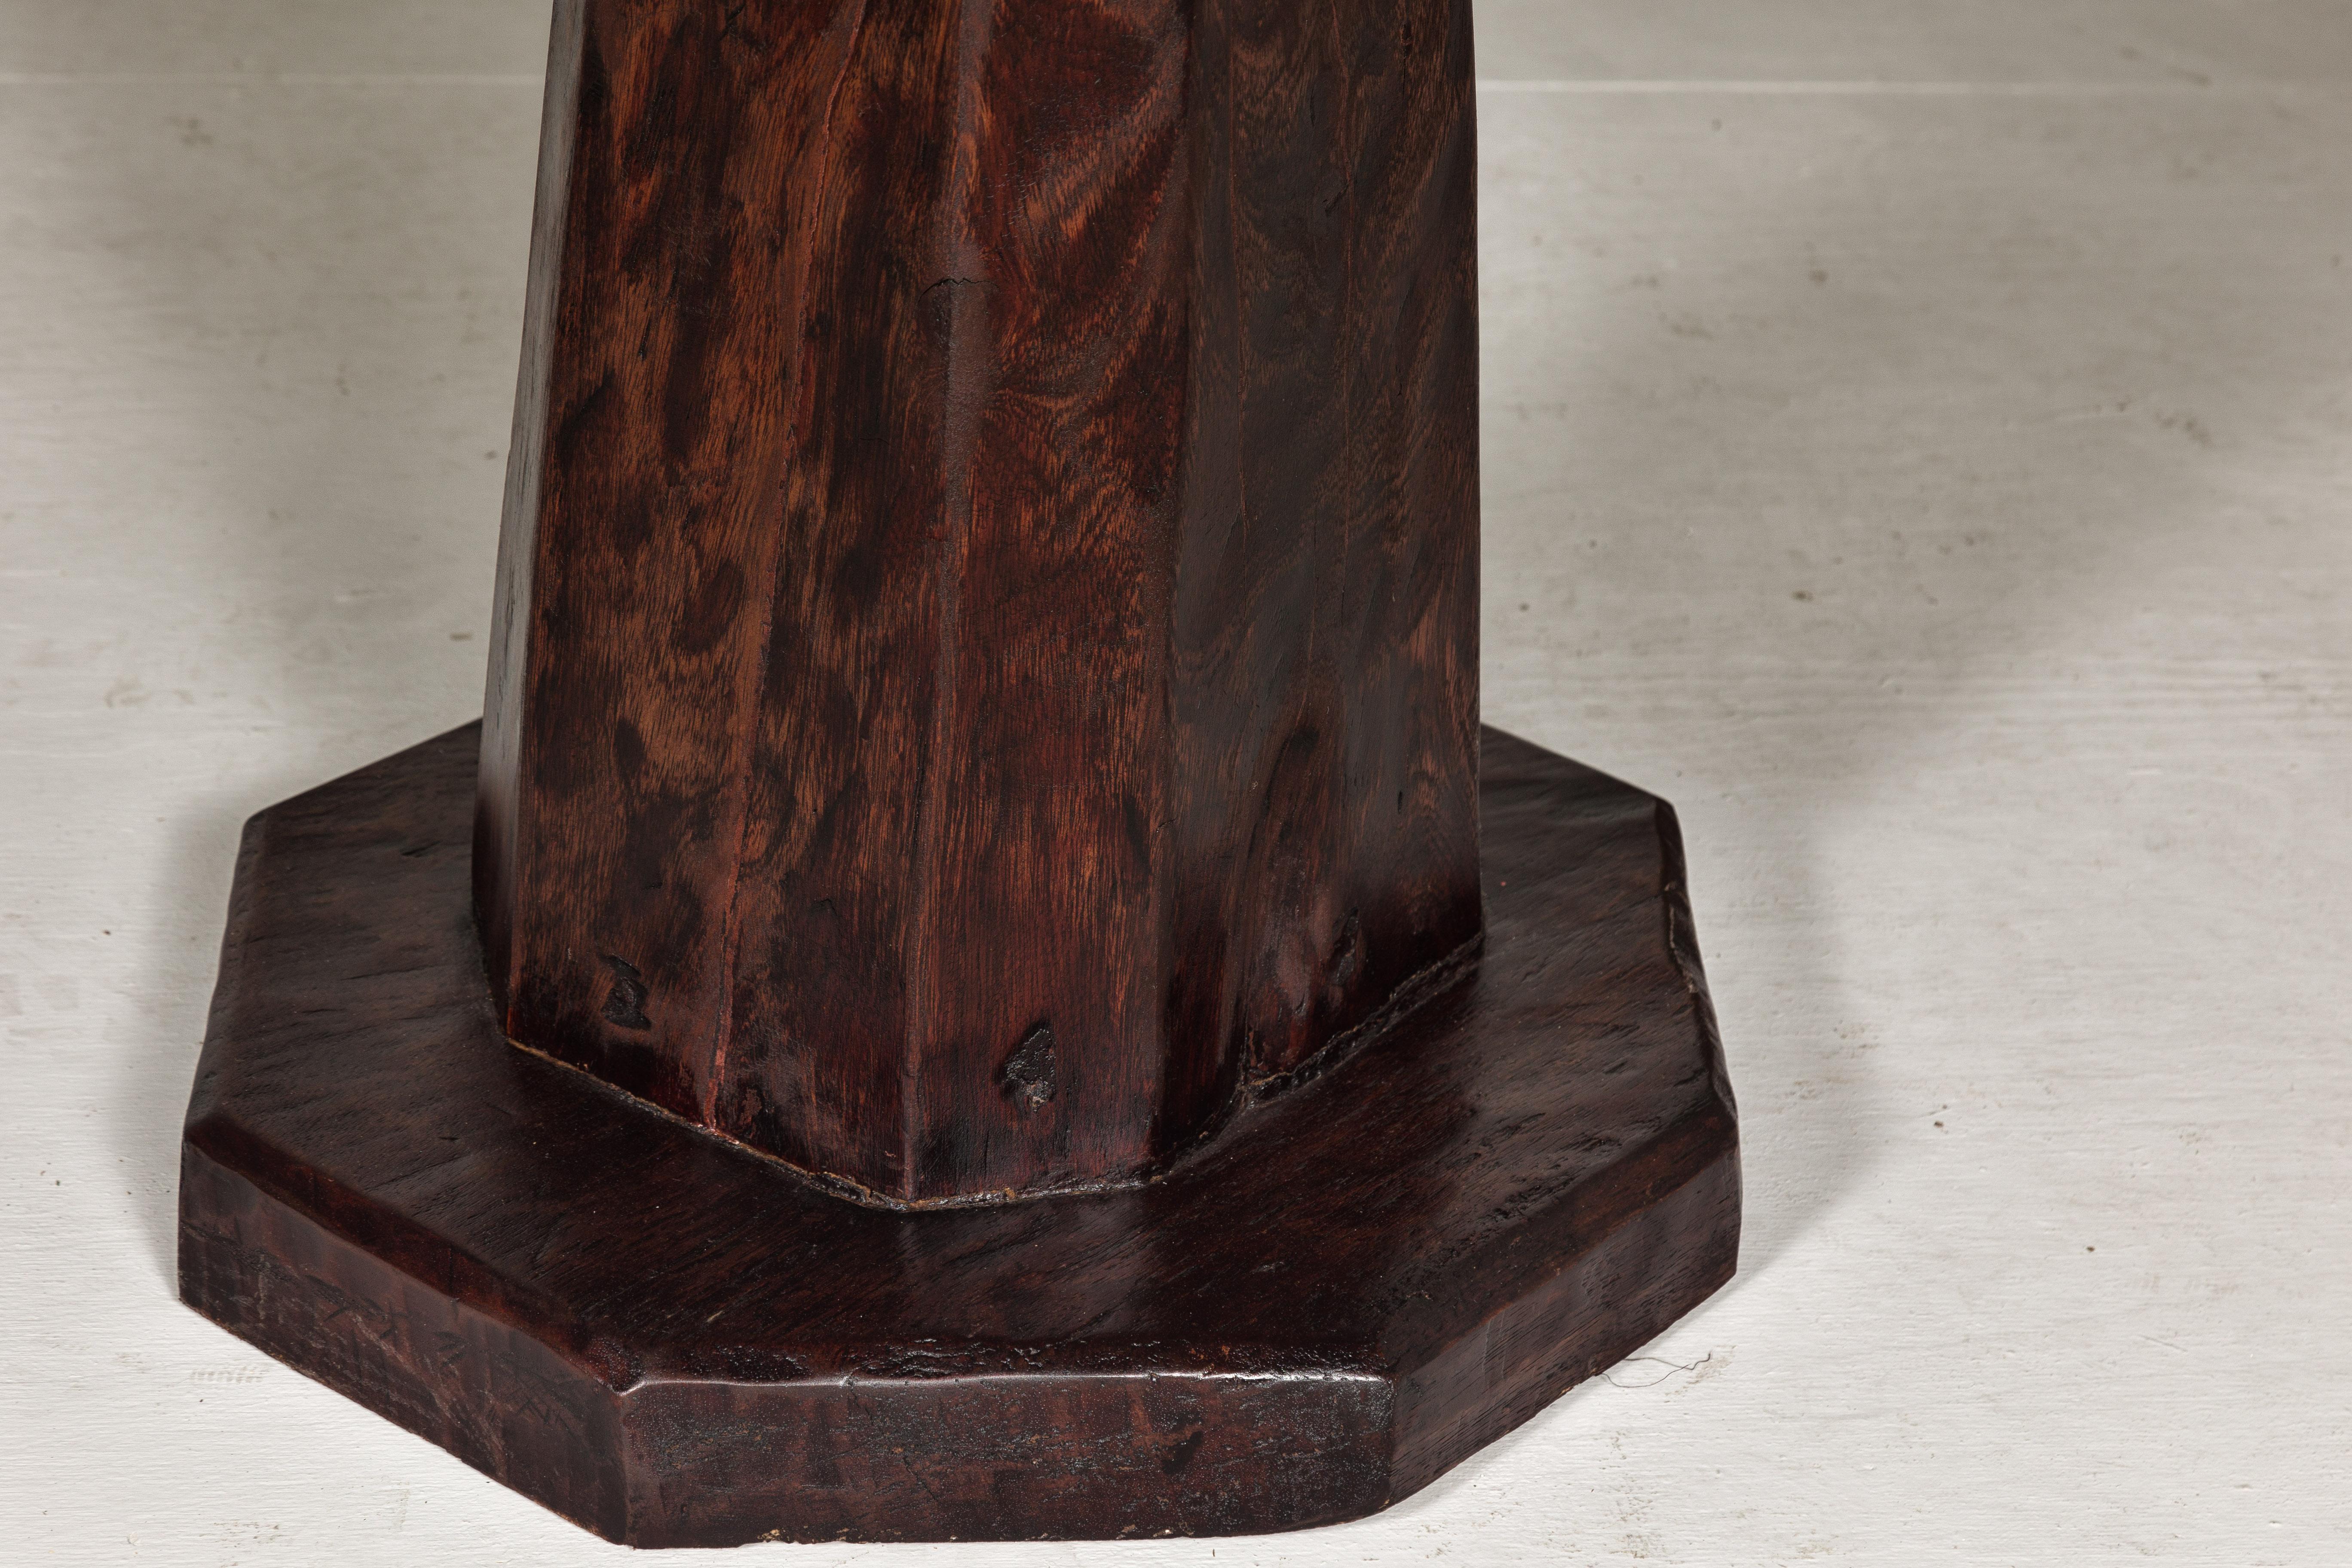 Teak Wood Round Top Center Pedestal Table with Dark Stain, Vintage For Sale 7